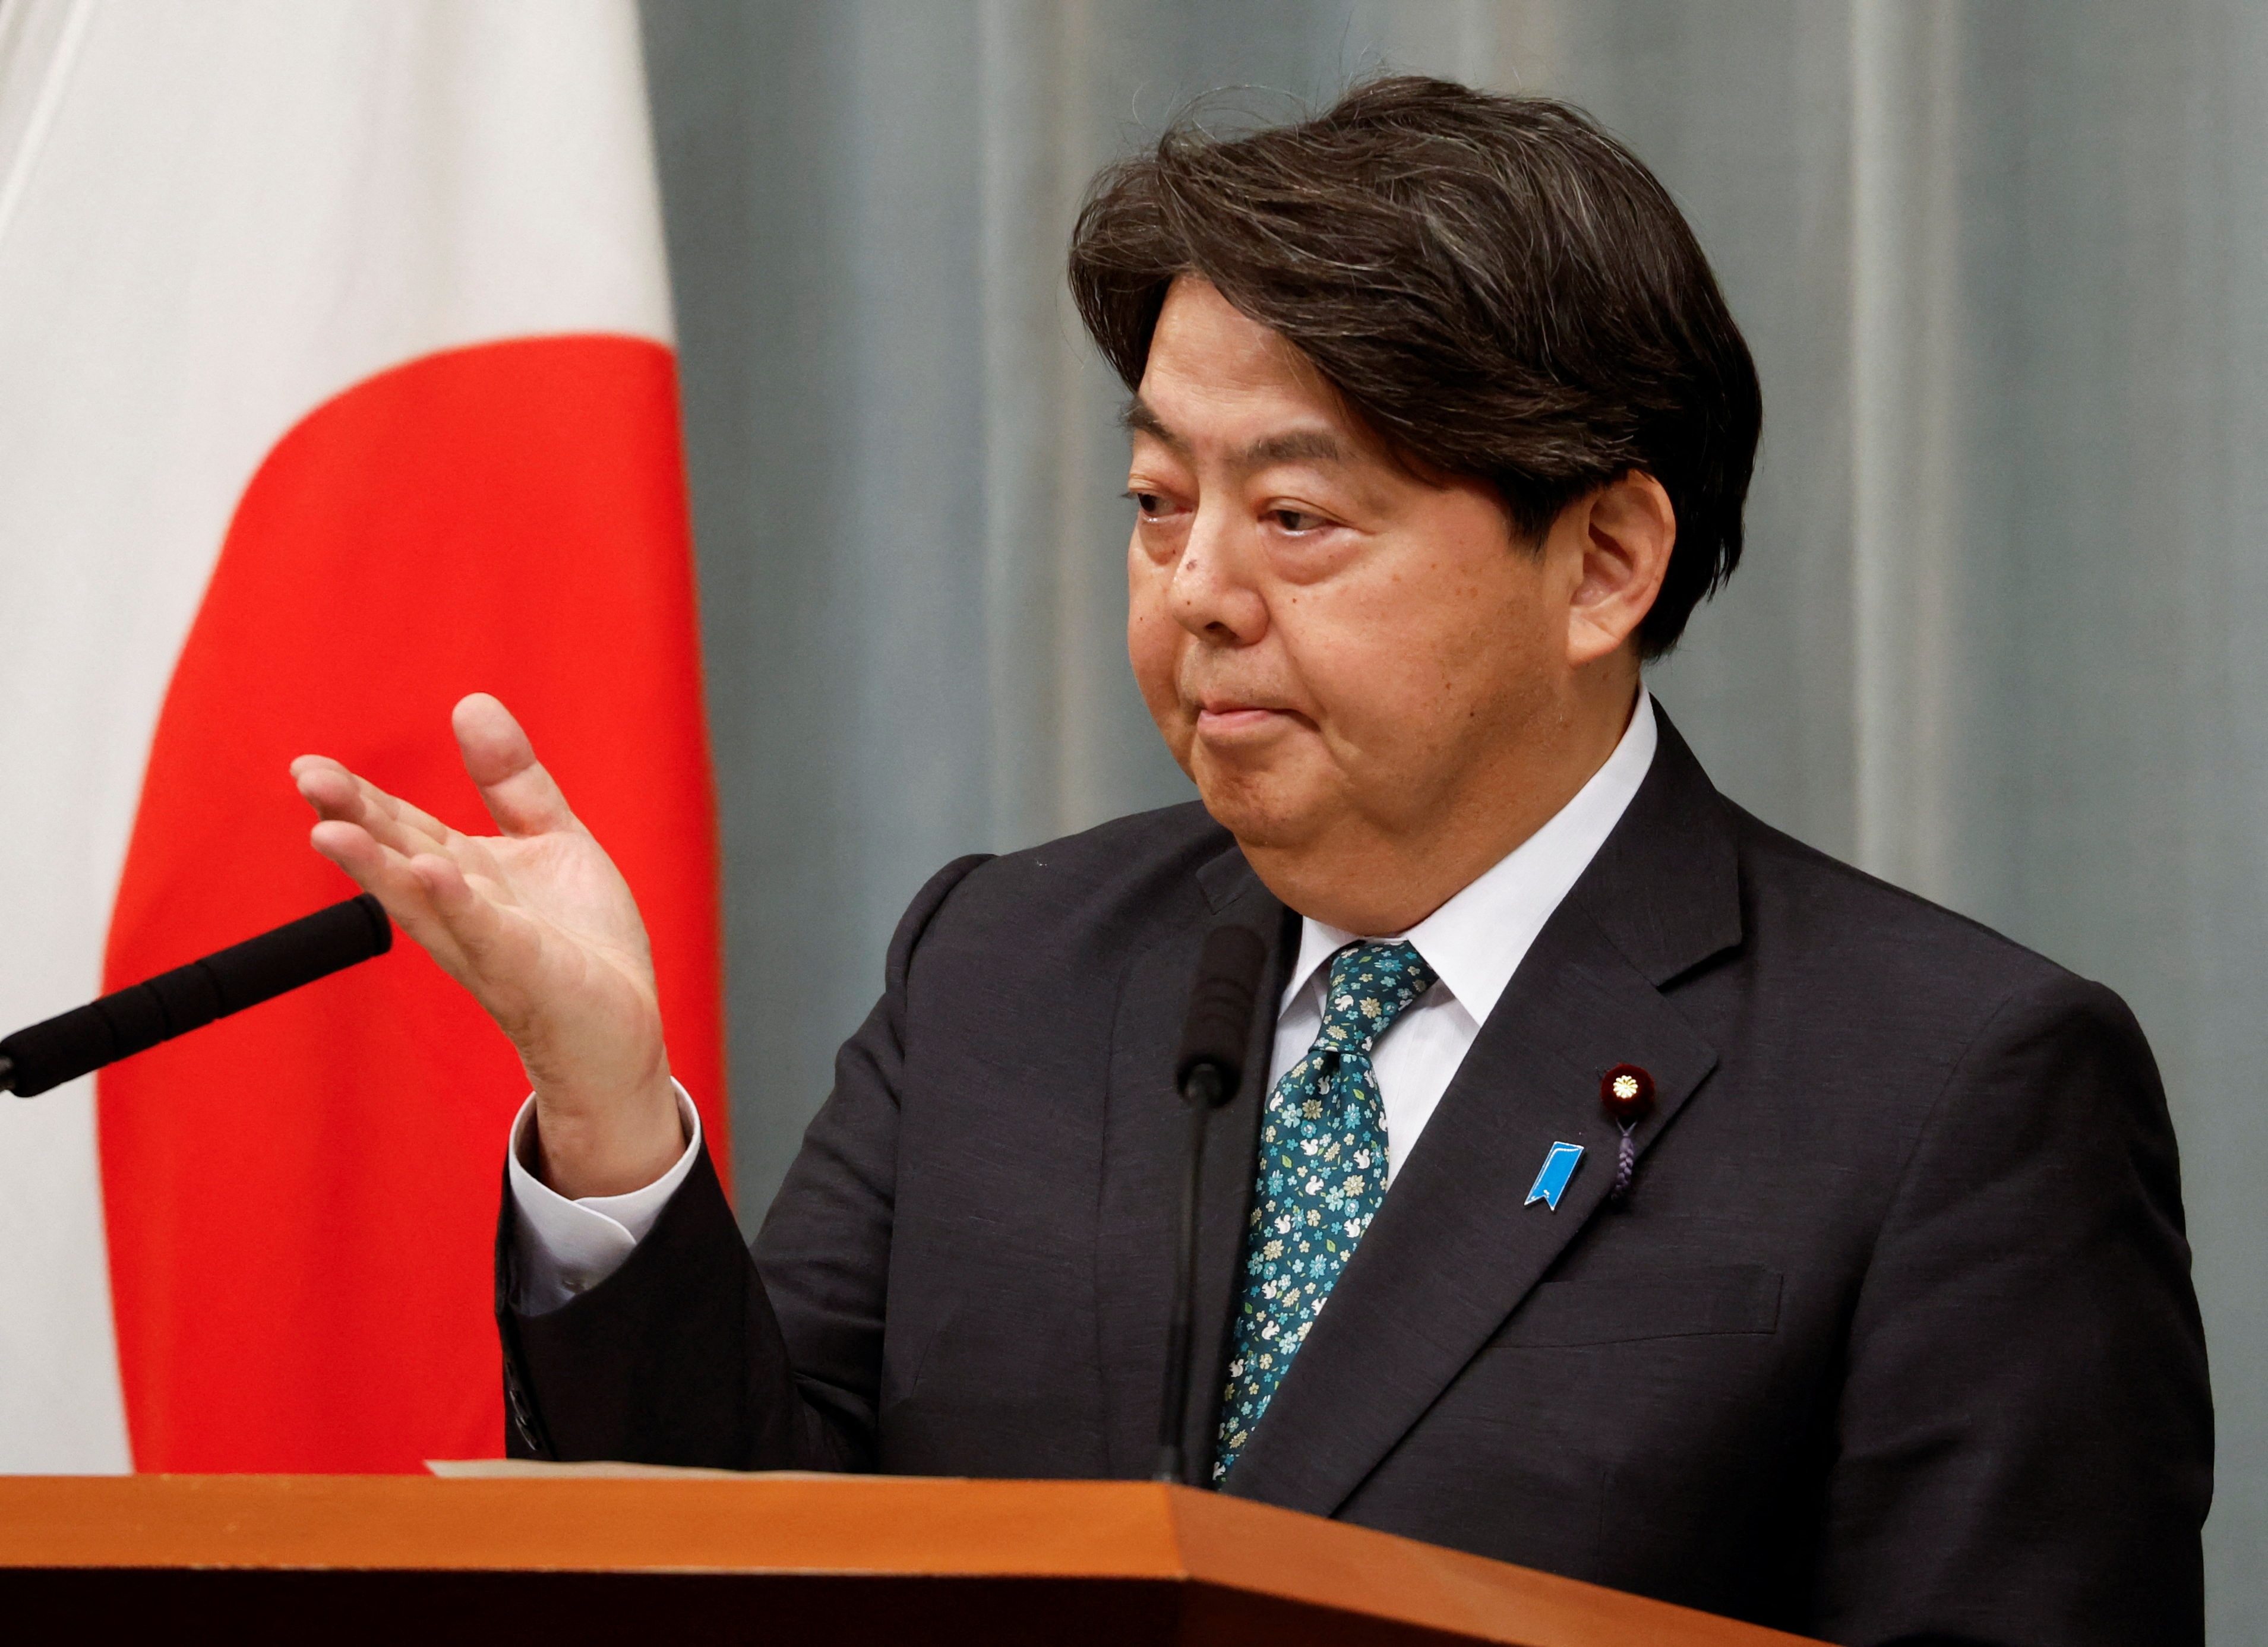 Japan's Chief Cabinet Secretary Yoshimasa Hayashi attends a press conference in Tokyo